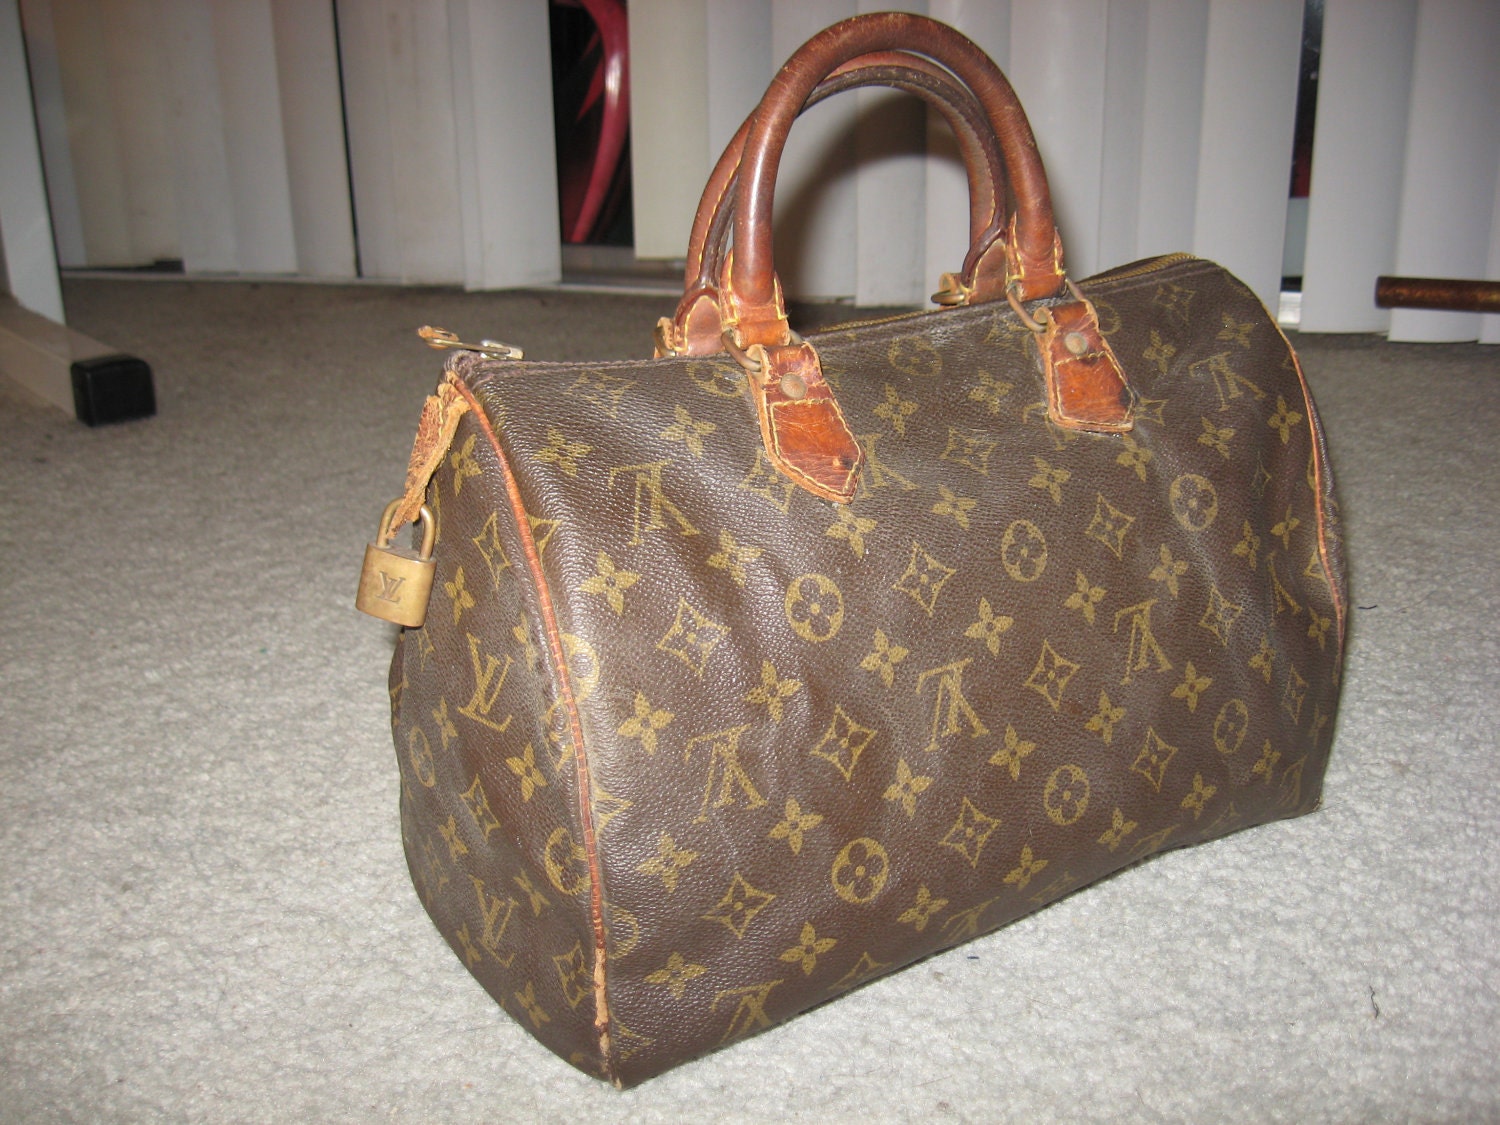 Authentic Vintage Louis Vuitton Speedy Bag Purse by rysechkin